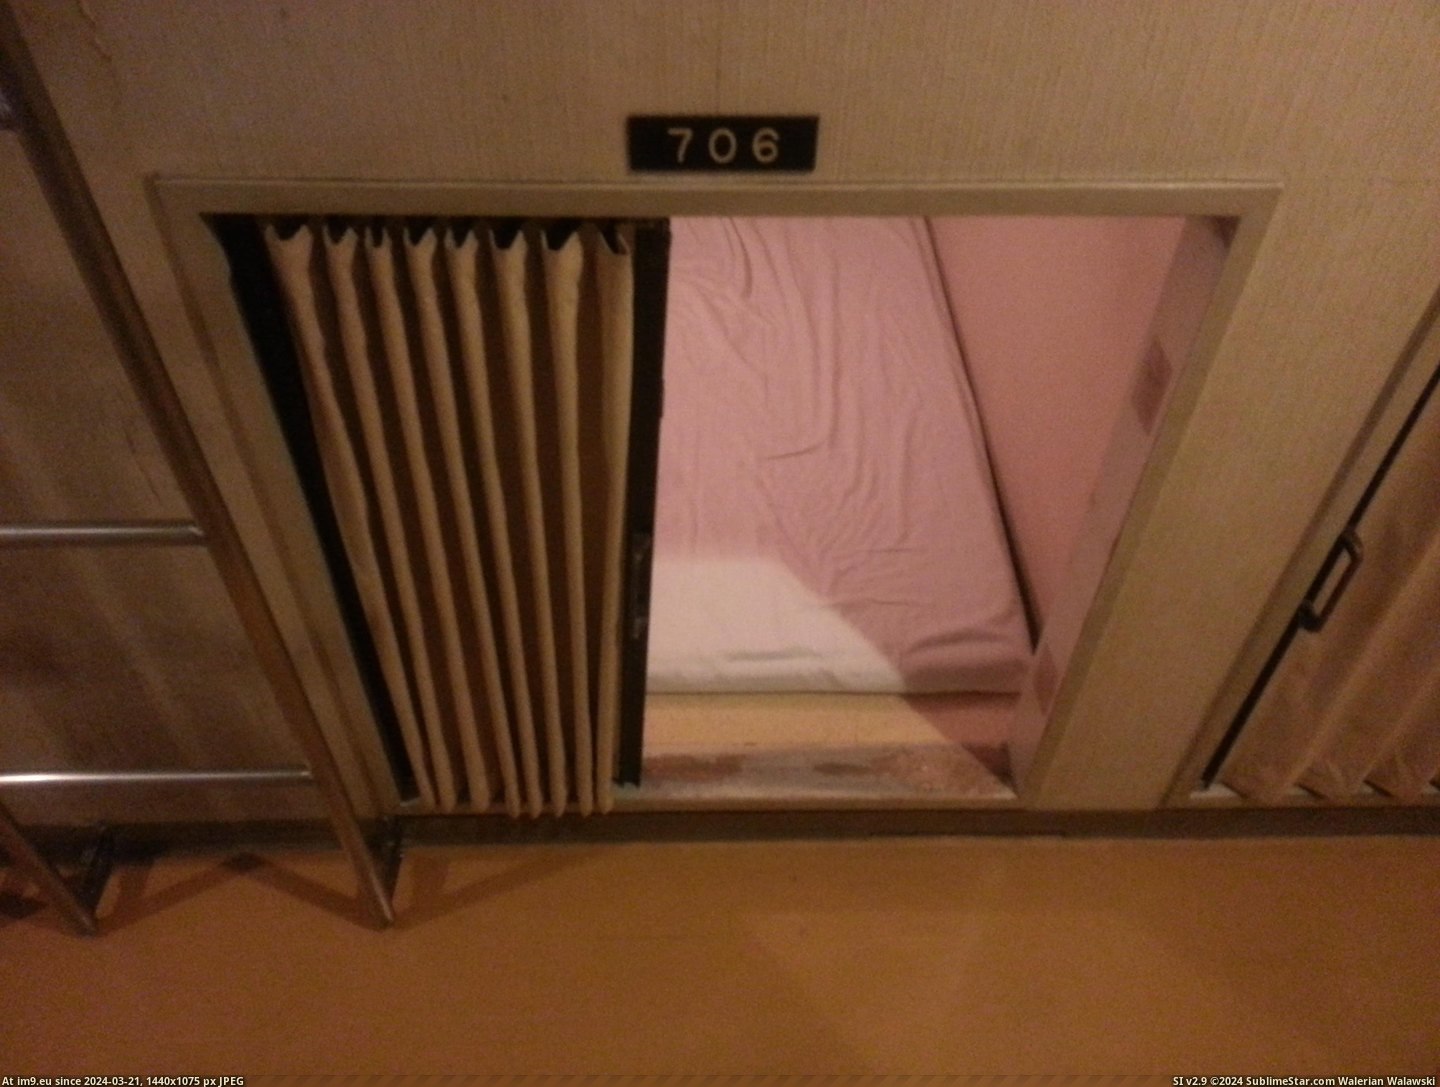 #Long #Hotel #Capsule #Week #Tokyo [Pics] My week-long home at a Tokyo capsule hotel 2 Pic. (Obraz z album My r/PICS favs))